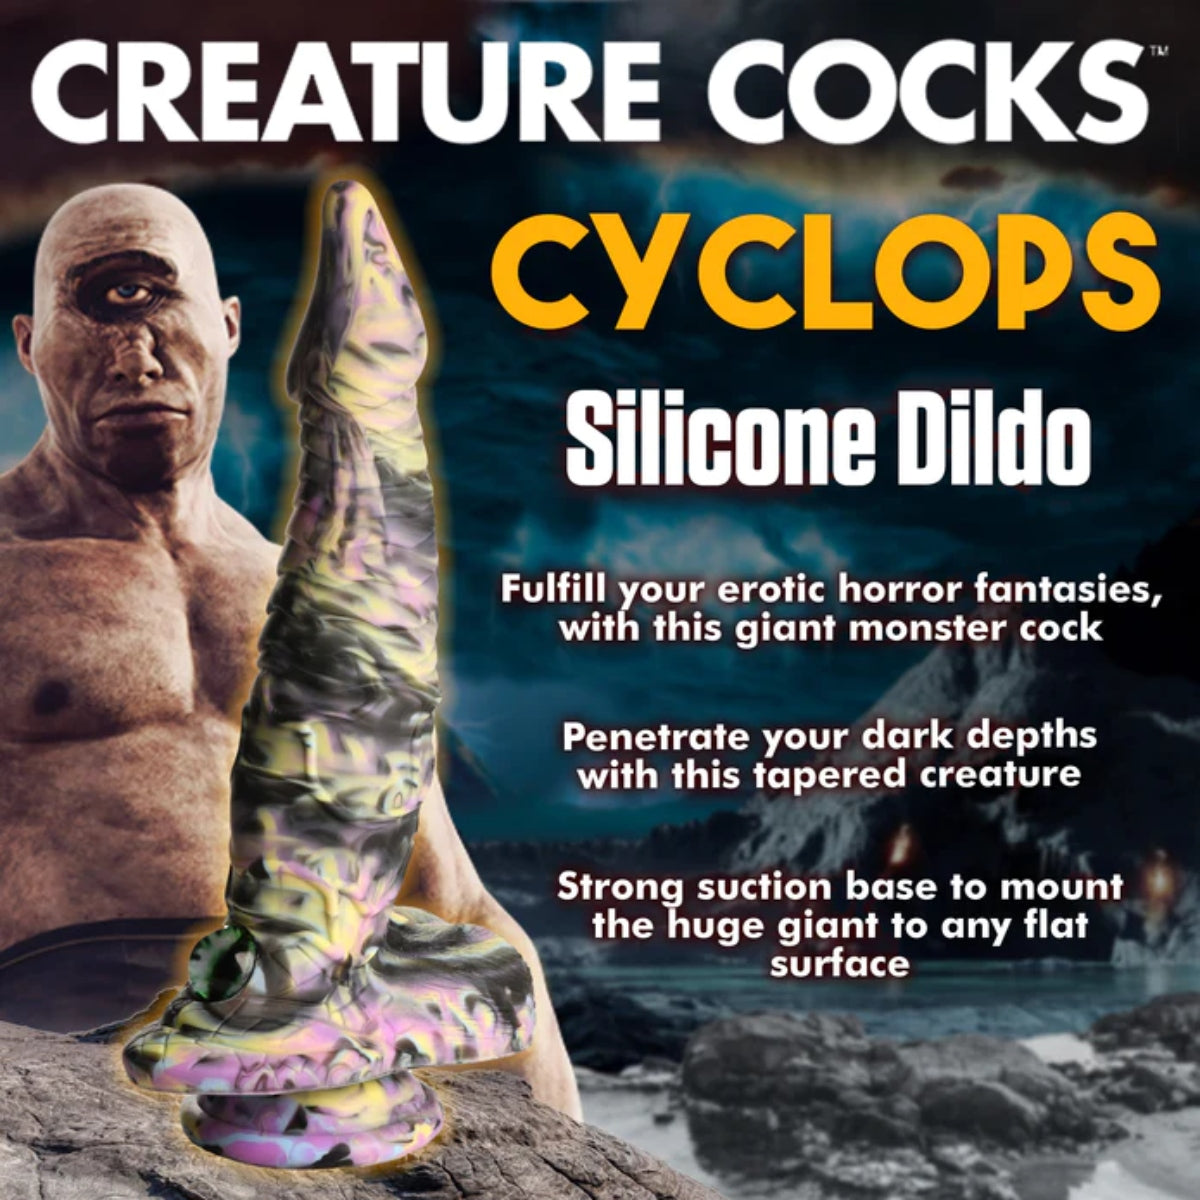 Creature Cocks | Cyclops Monster Silicone Dildo